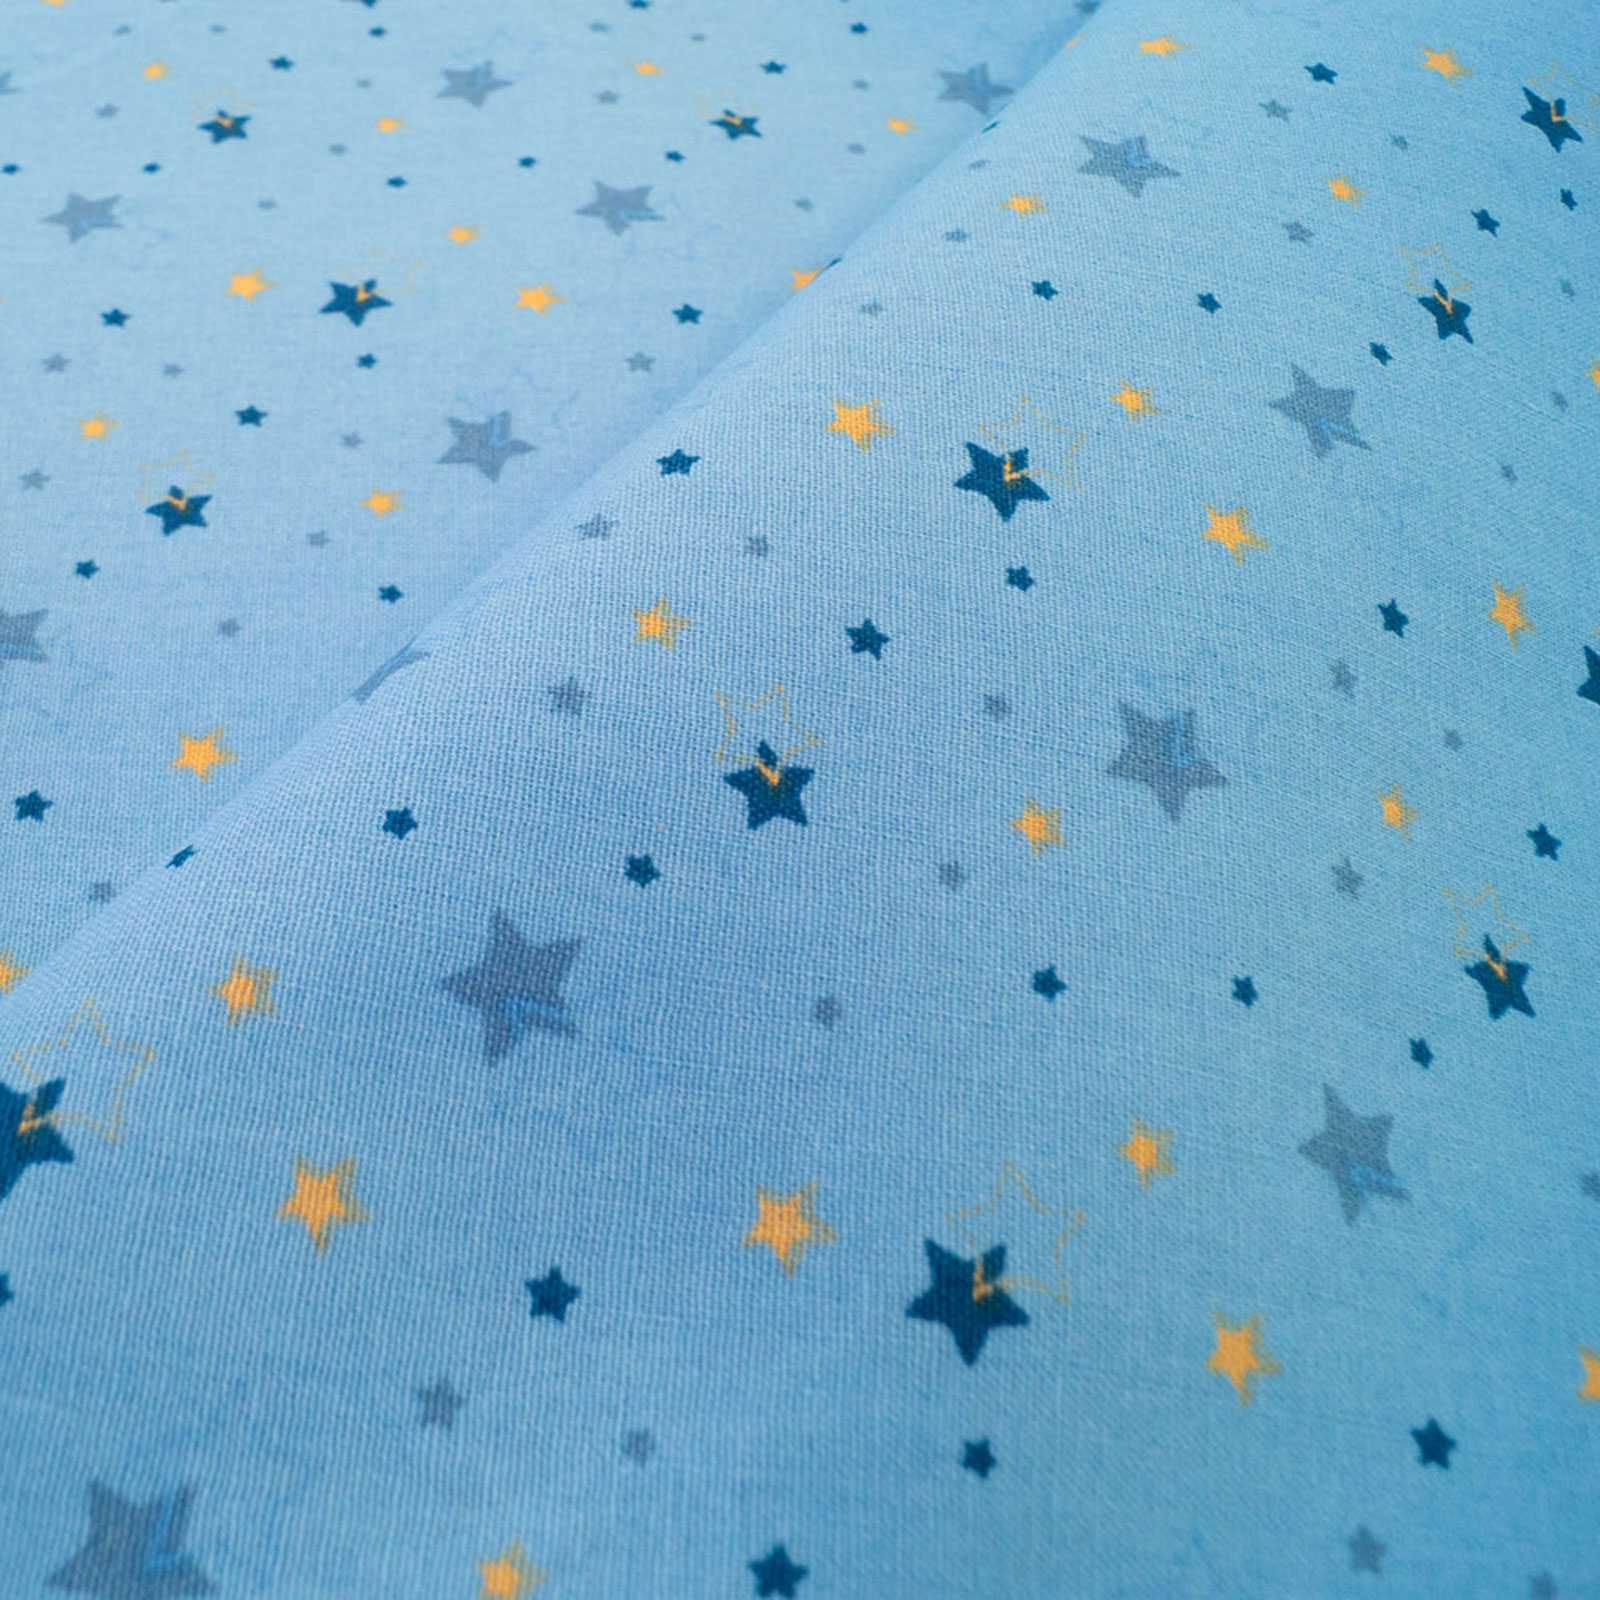 Cotton fabric - Starry sky light blue